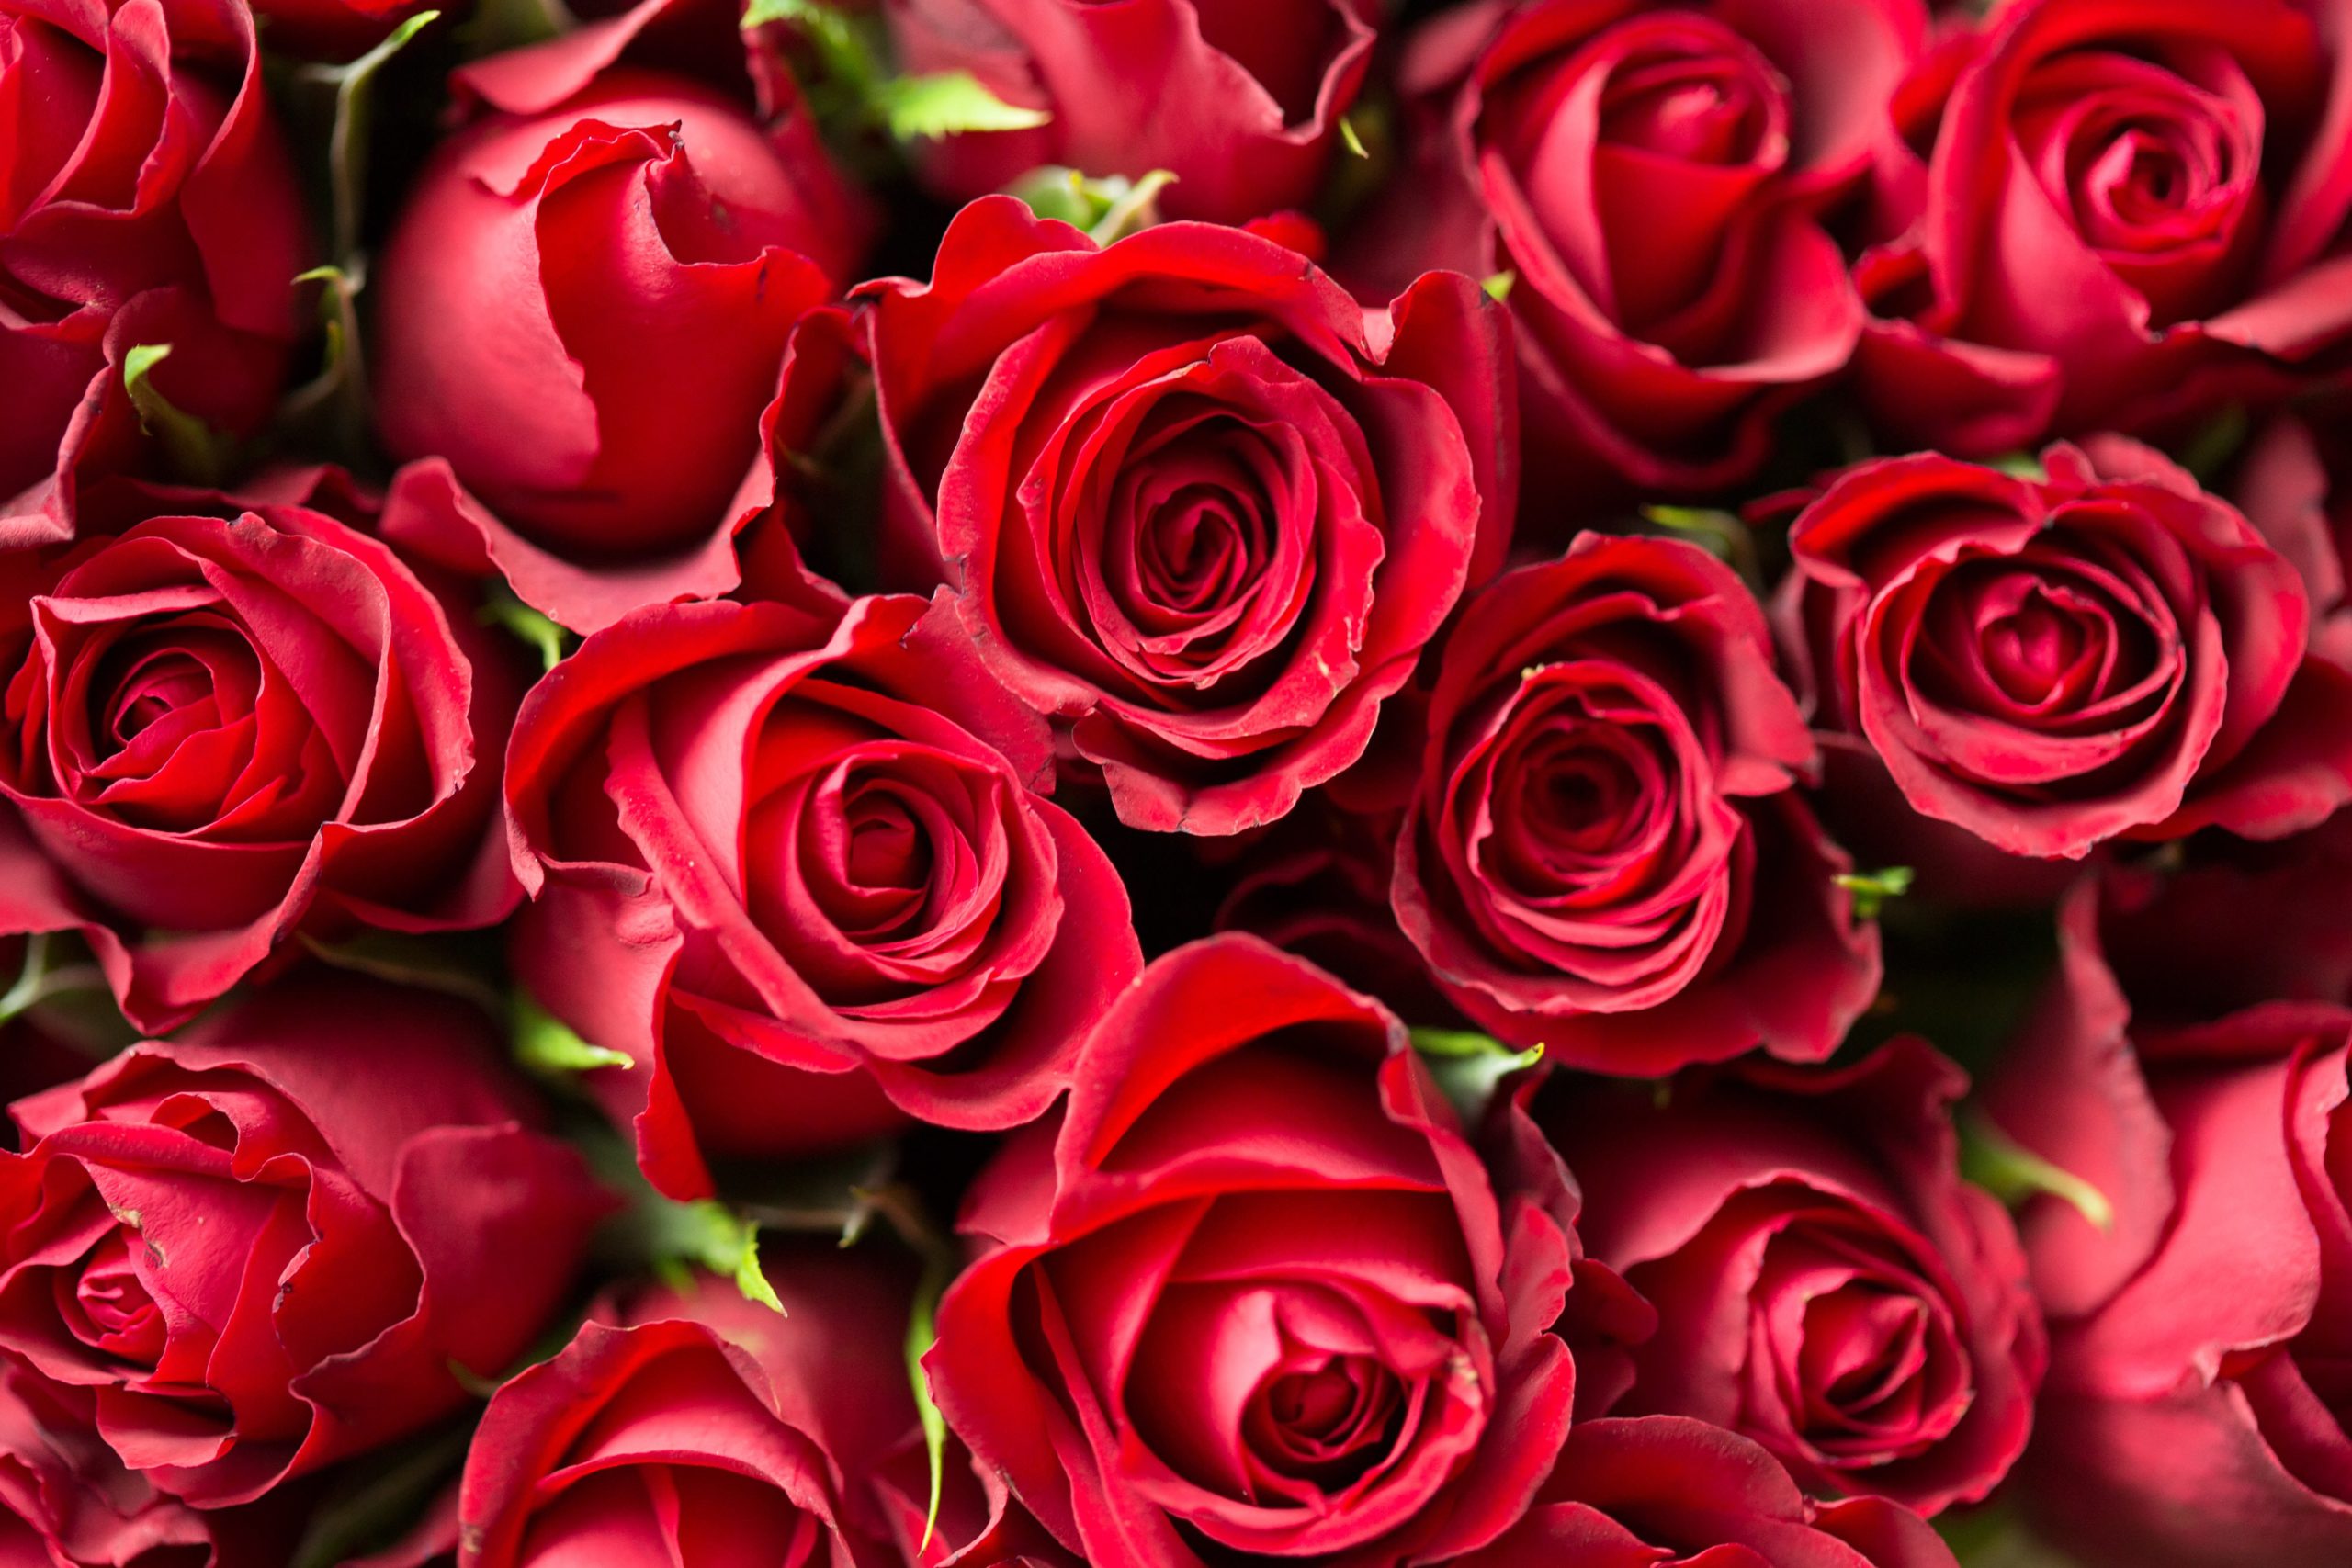 bunch of red roses | porta potty rentals vancouver salem portland oregon